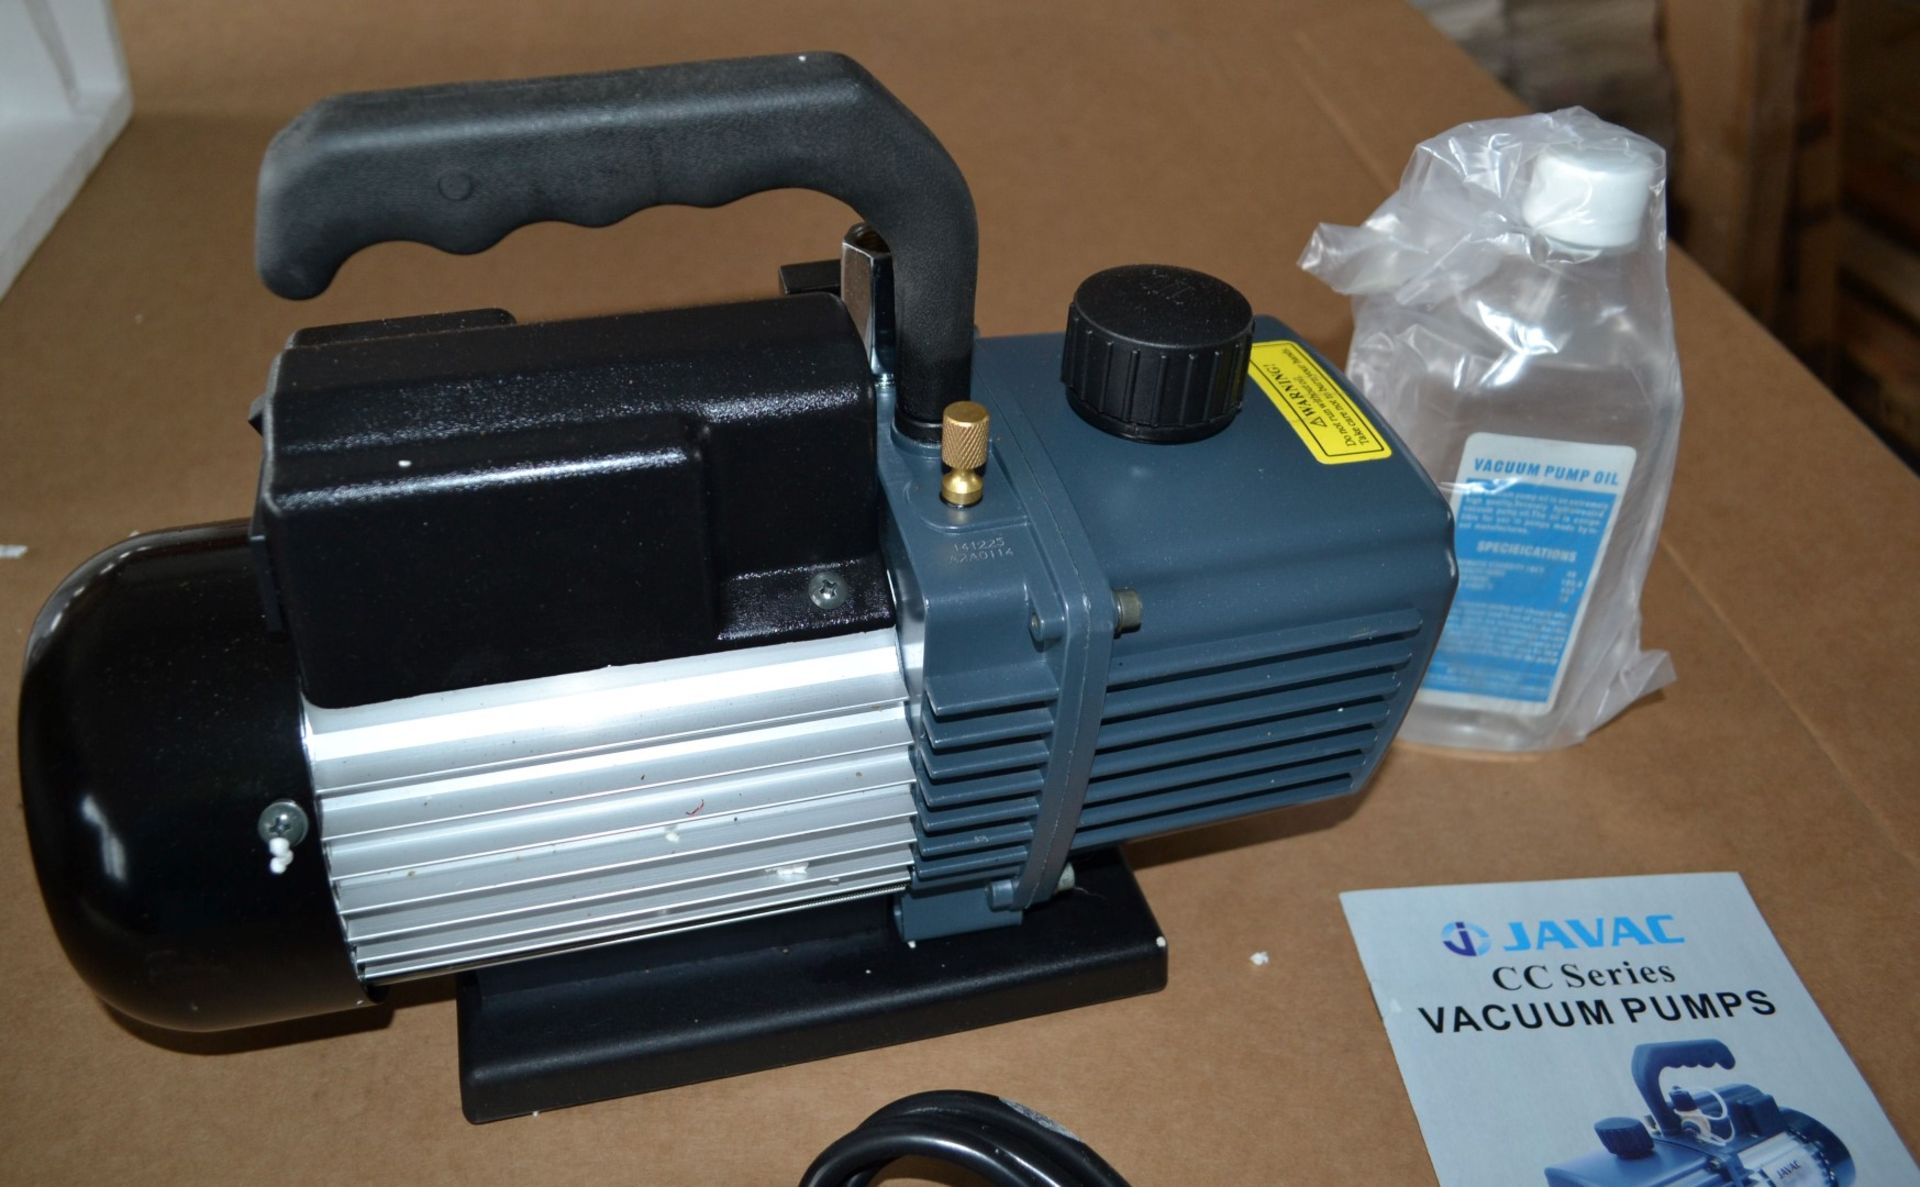 1 x Javac Vacuum Pump - 40Lt/min - Science/Educational - CL185 - Ref: DSY0282 - Location: Stoke-on-T - Image 7 of 9